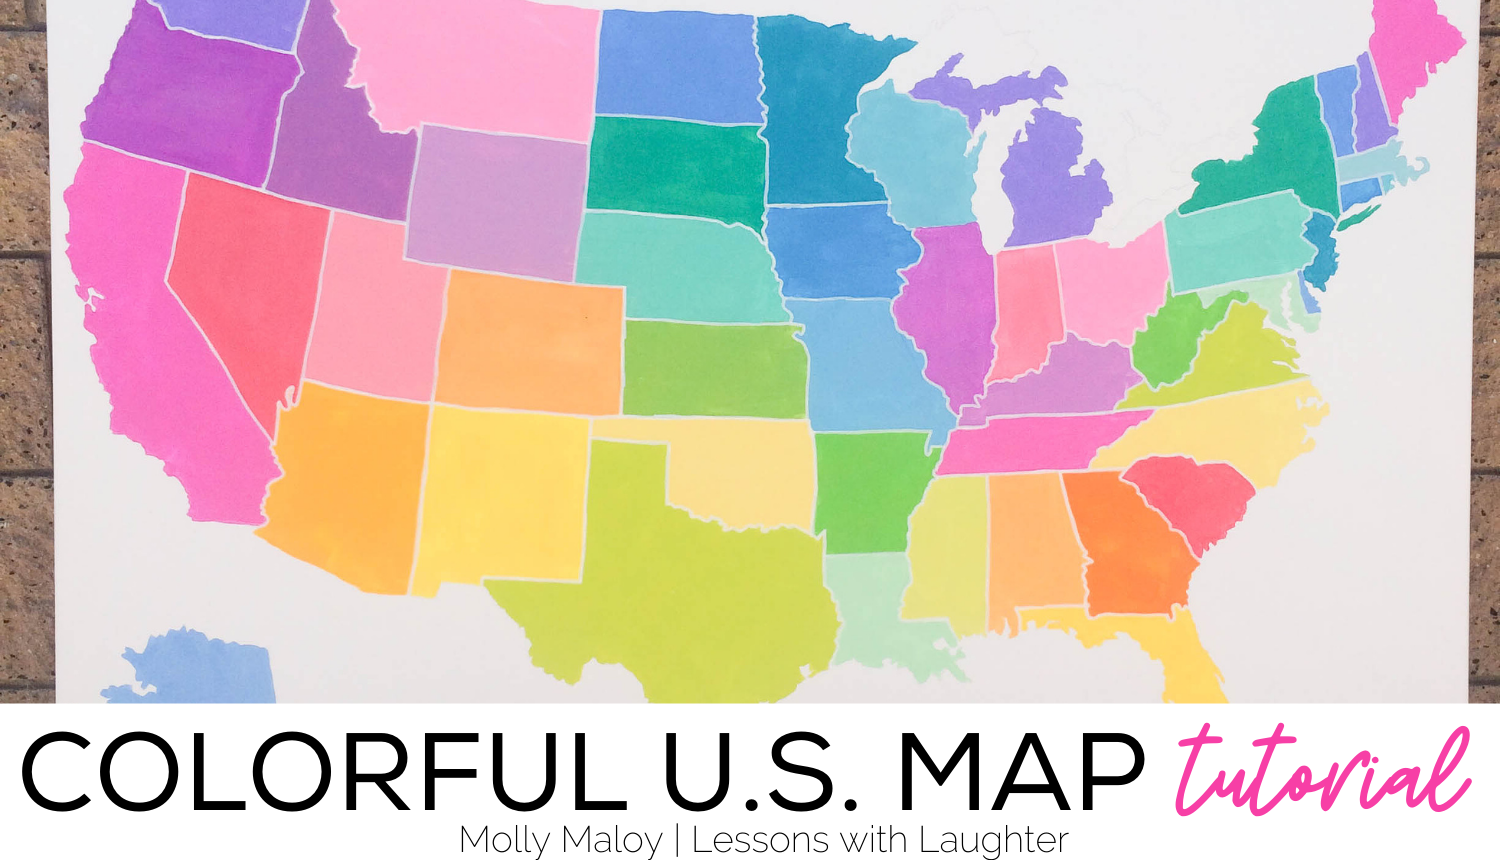 Colorful U.S. Map tutorial